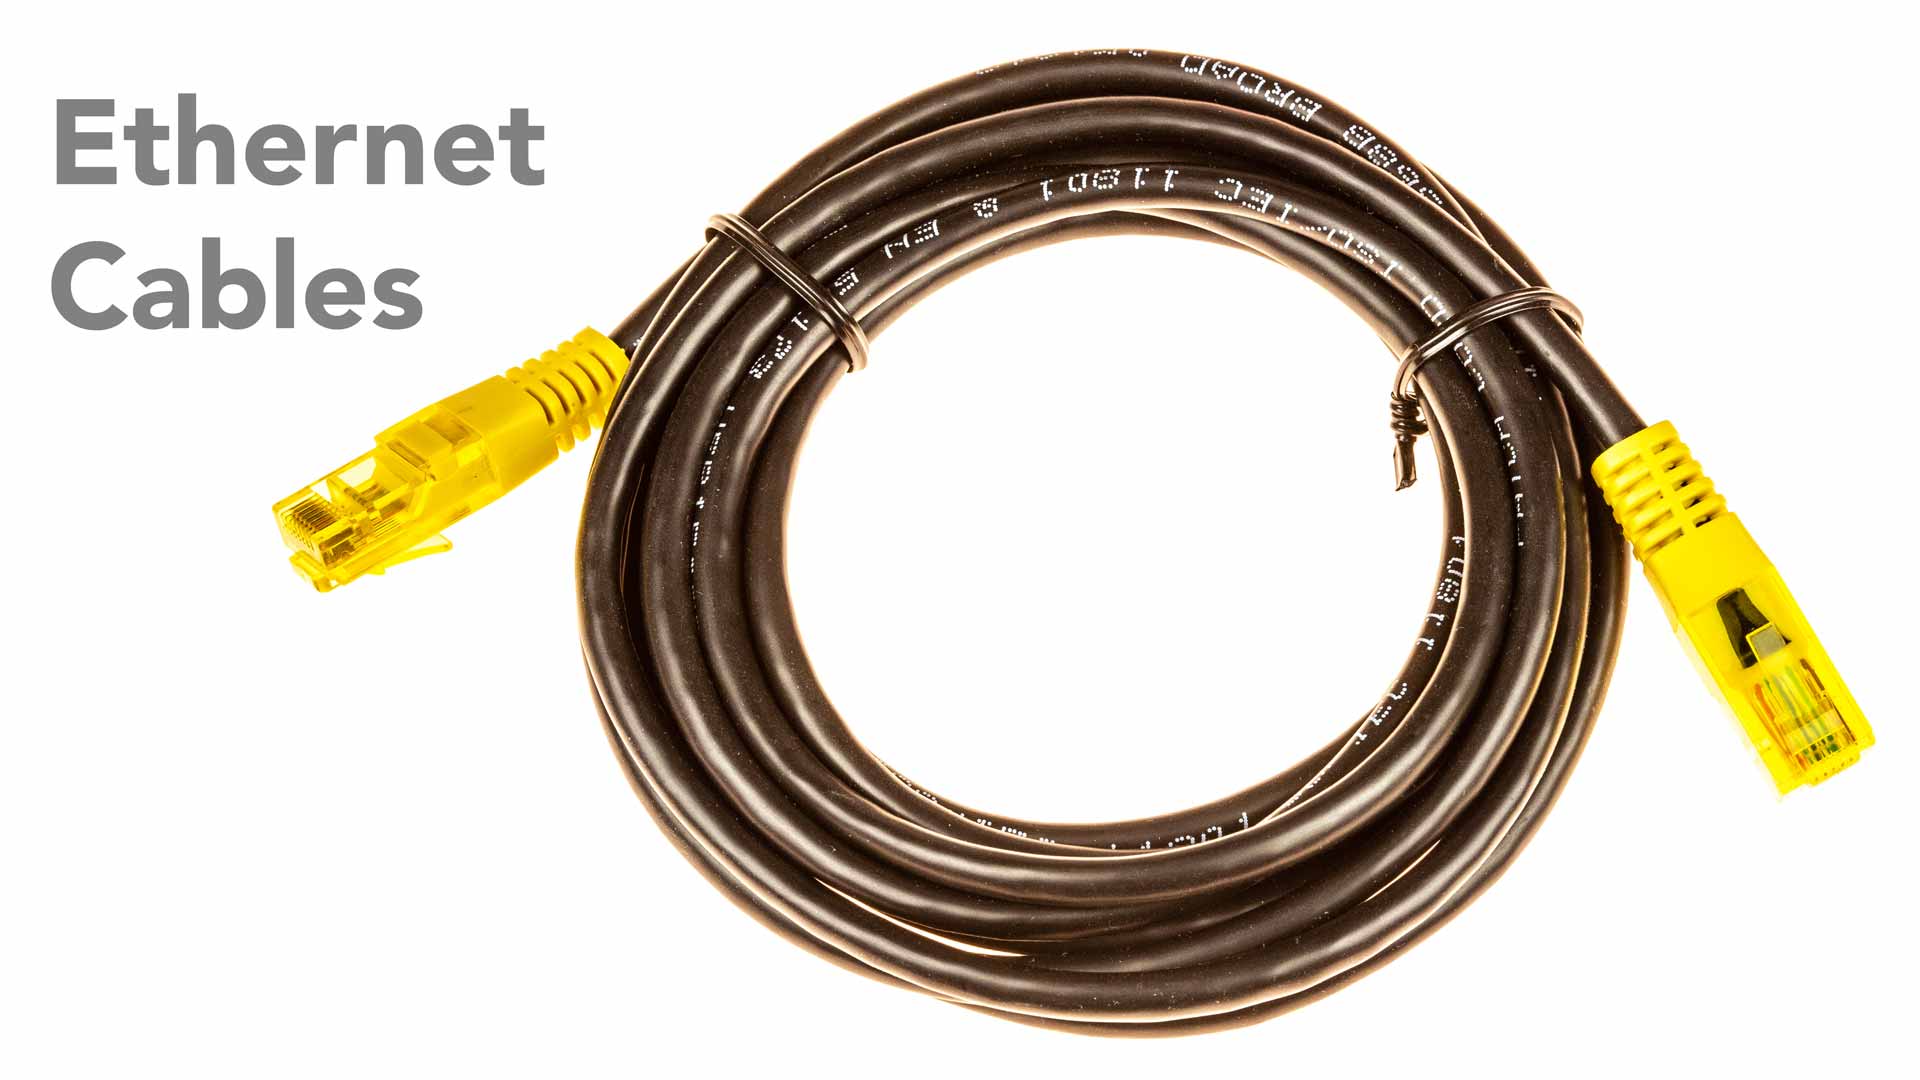 Ethernet Cables Explained: categories, types, CAT 5, 5e, 6, 6e, 7